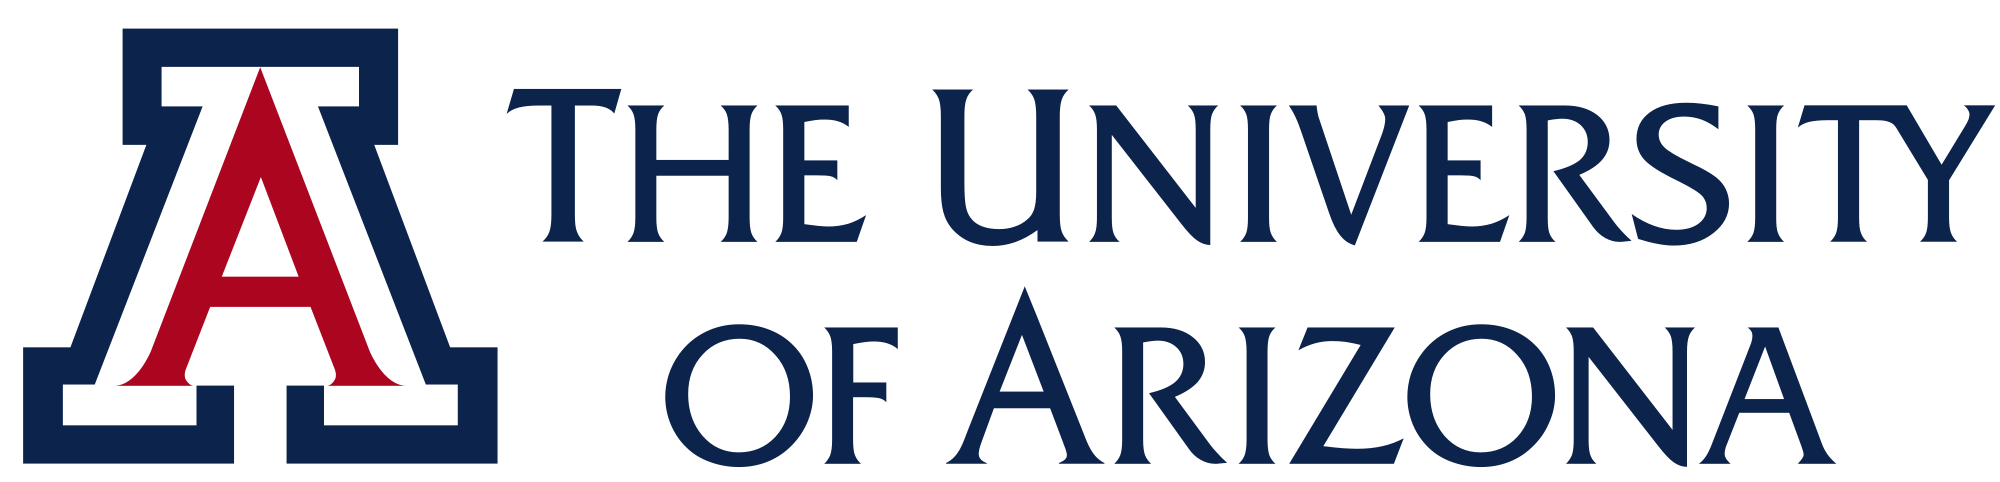 University of Arizona Logo - File:University of Arizona logo.svg - Wikimedia Commons